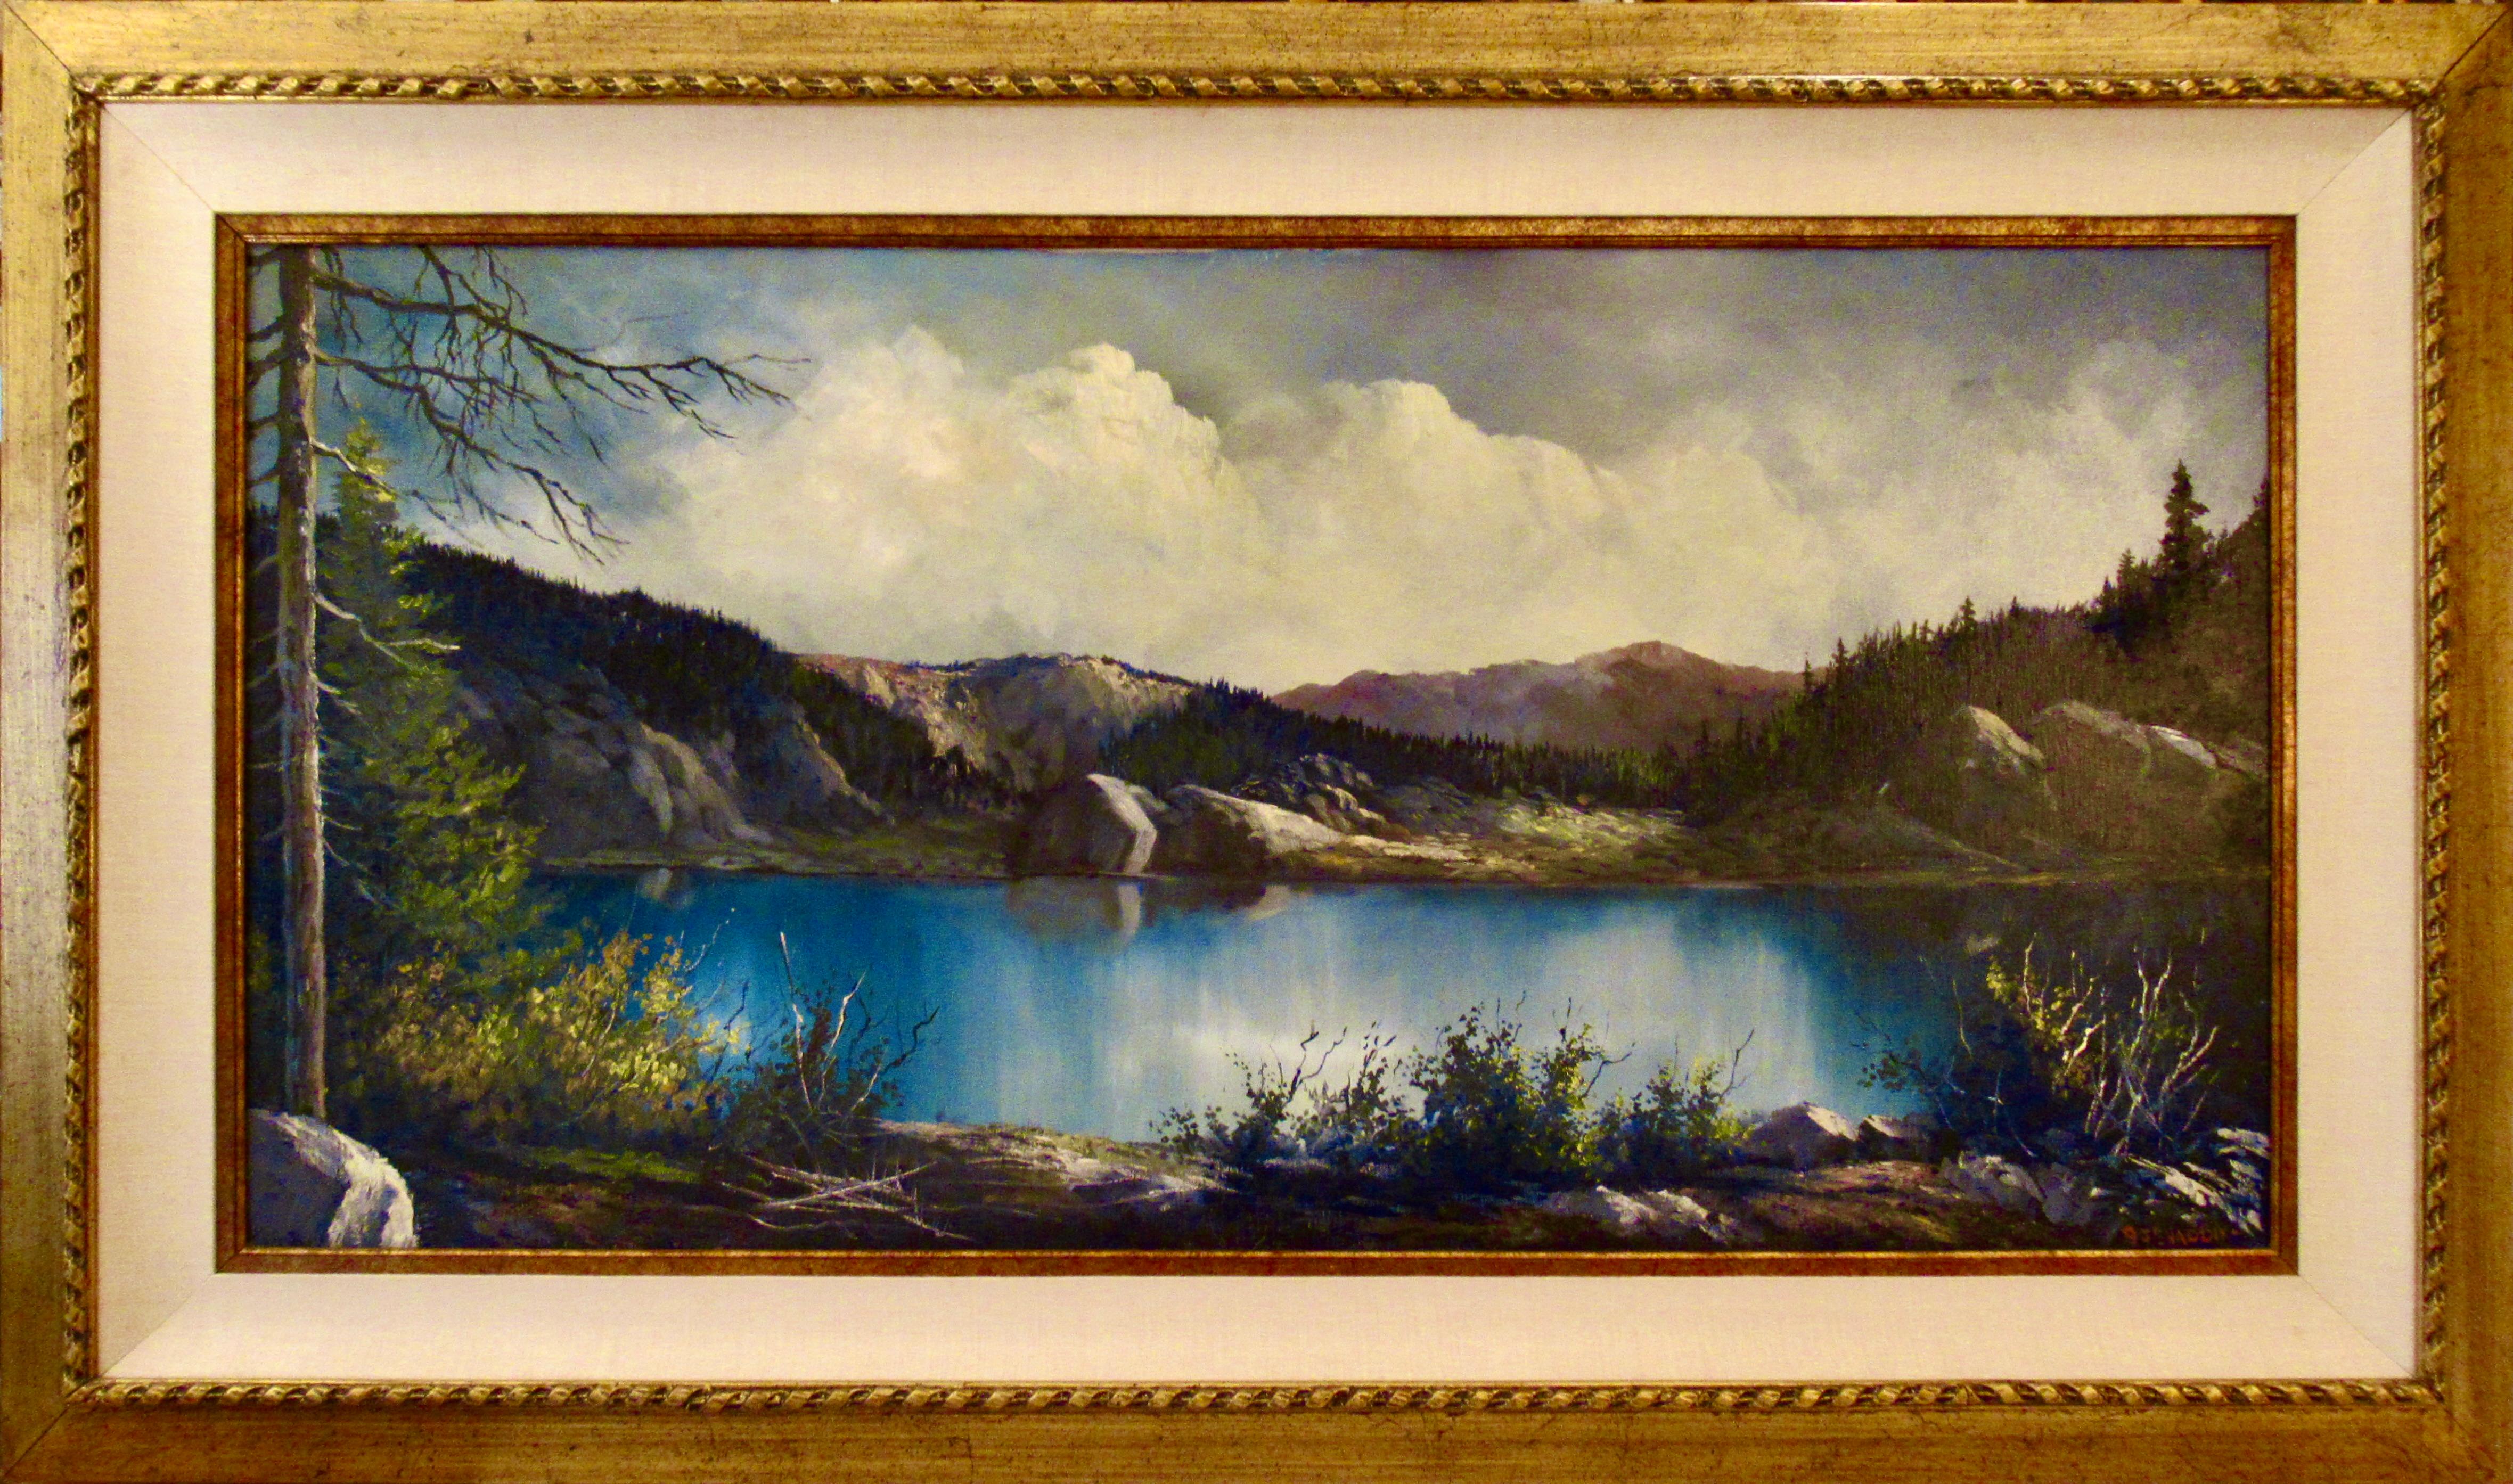 Bill Shaddix Figurative Painting - "Summer Stillness, Lake Tahoe" Large oil painting on canvas